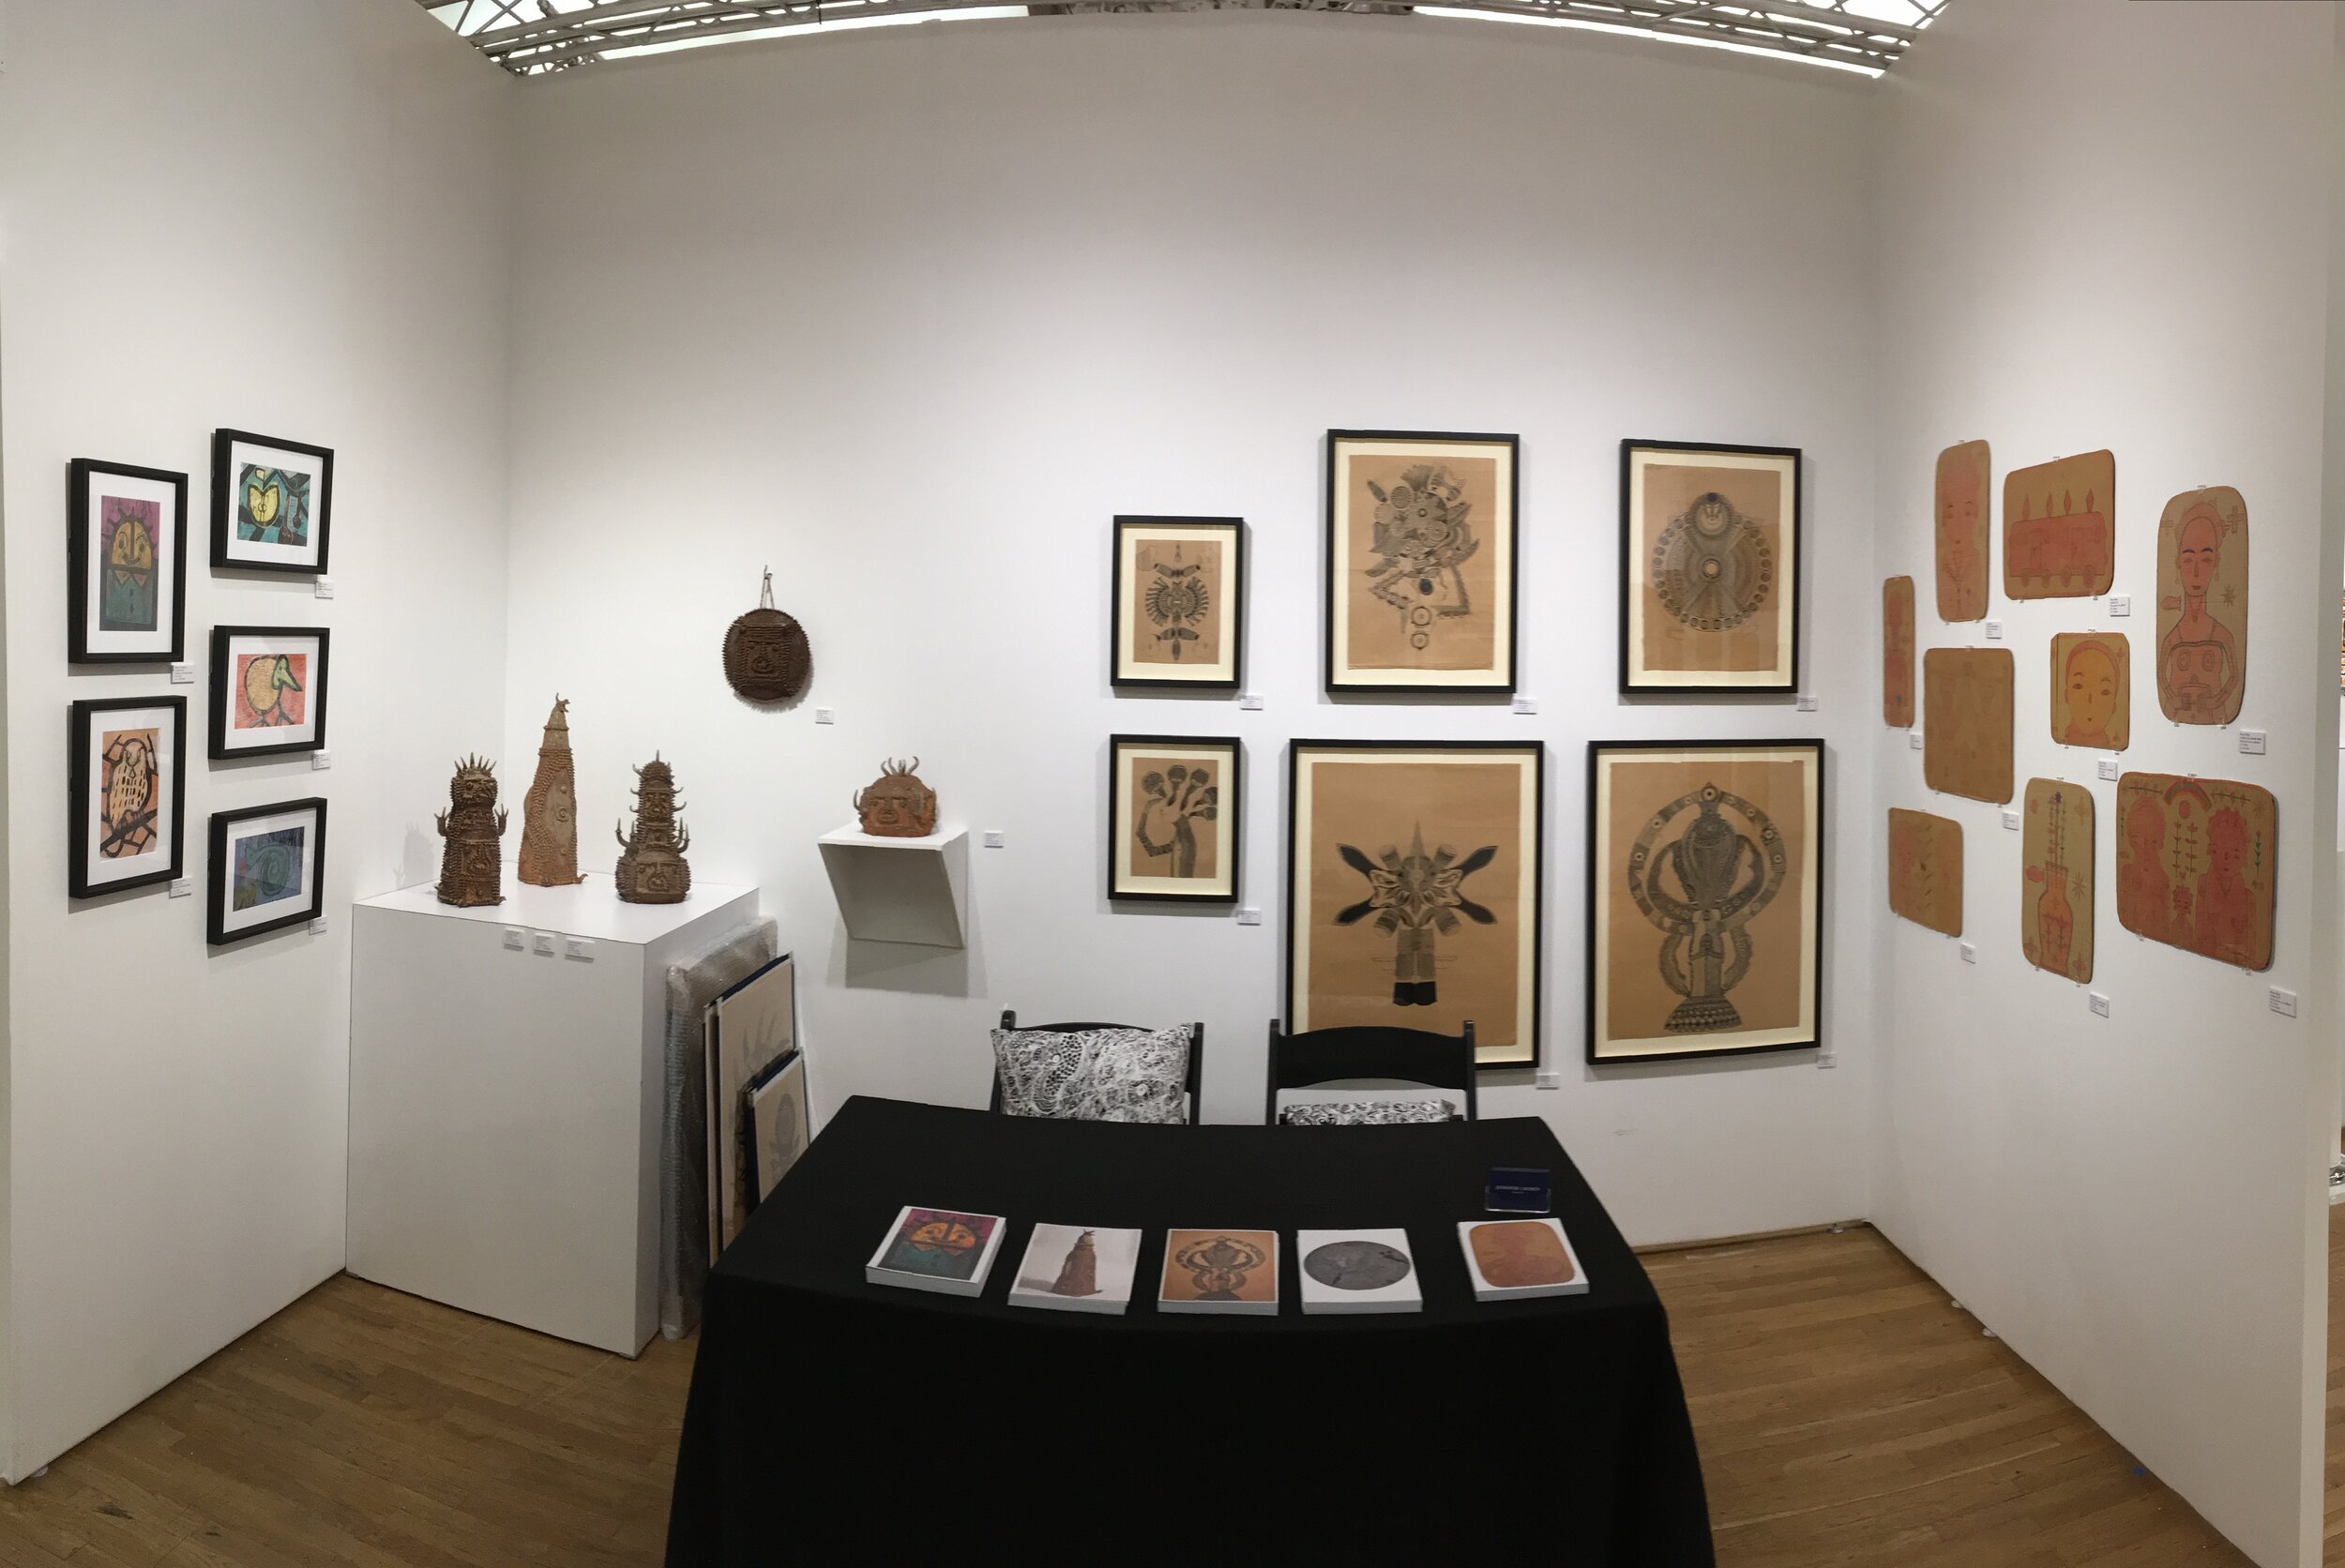   Booth at Outsider Art Fair New York 2018  